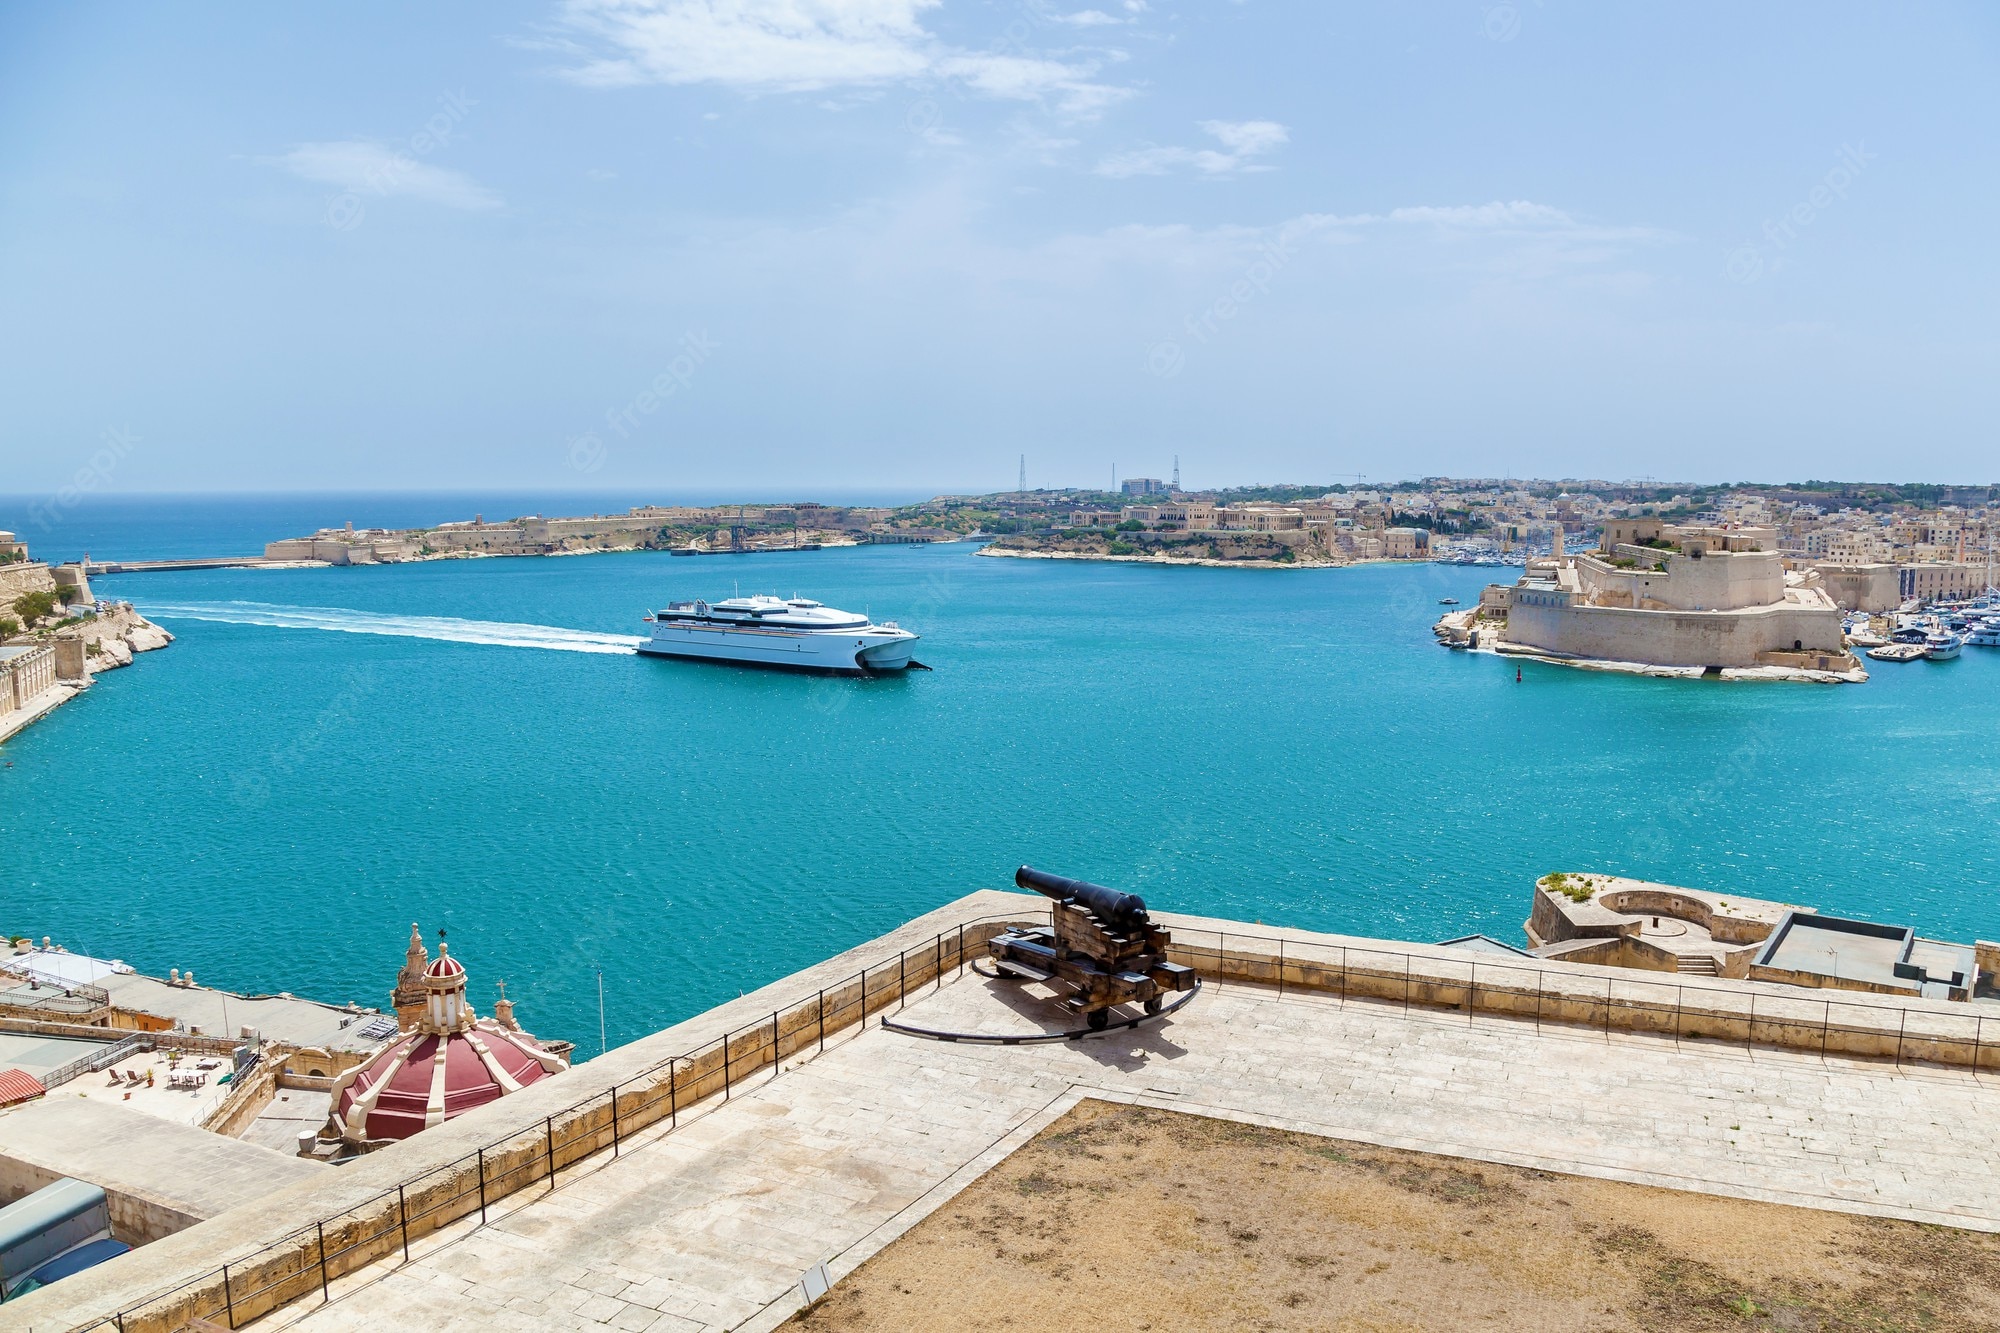 Citadel Of Victoria The Island Of Gozo 4K Wallpapers